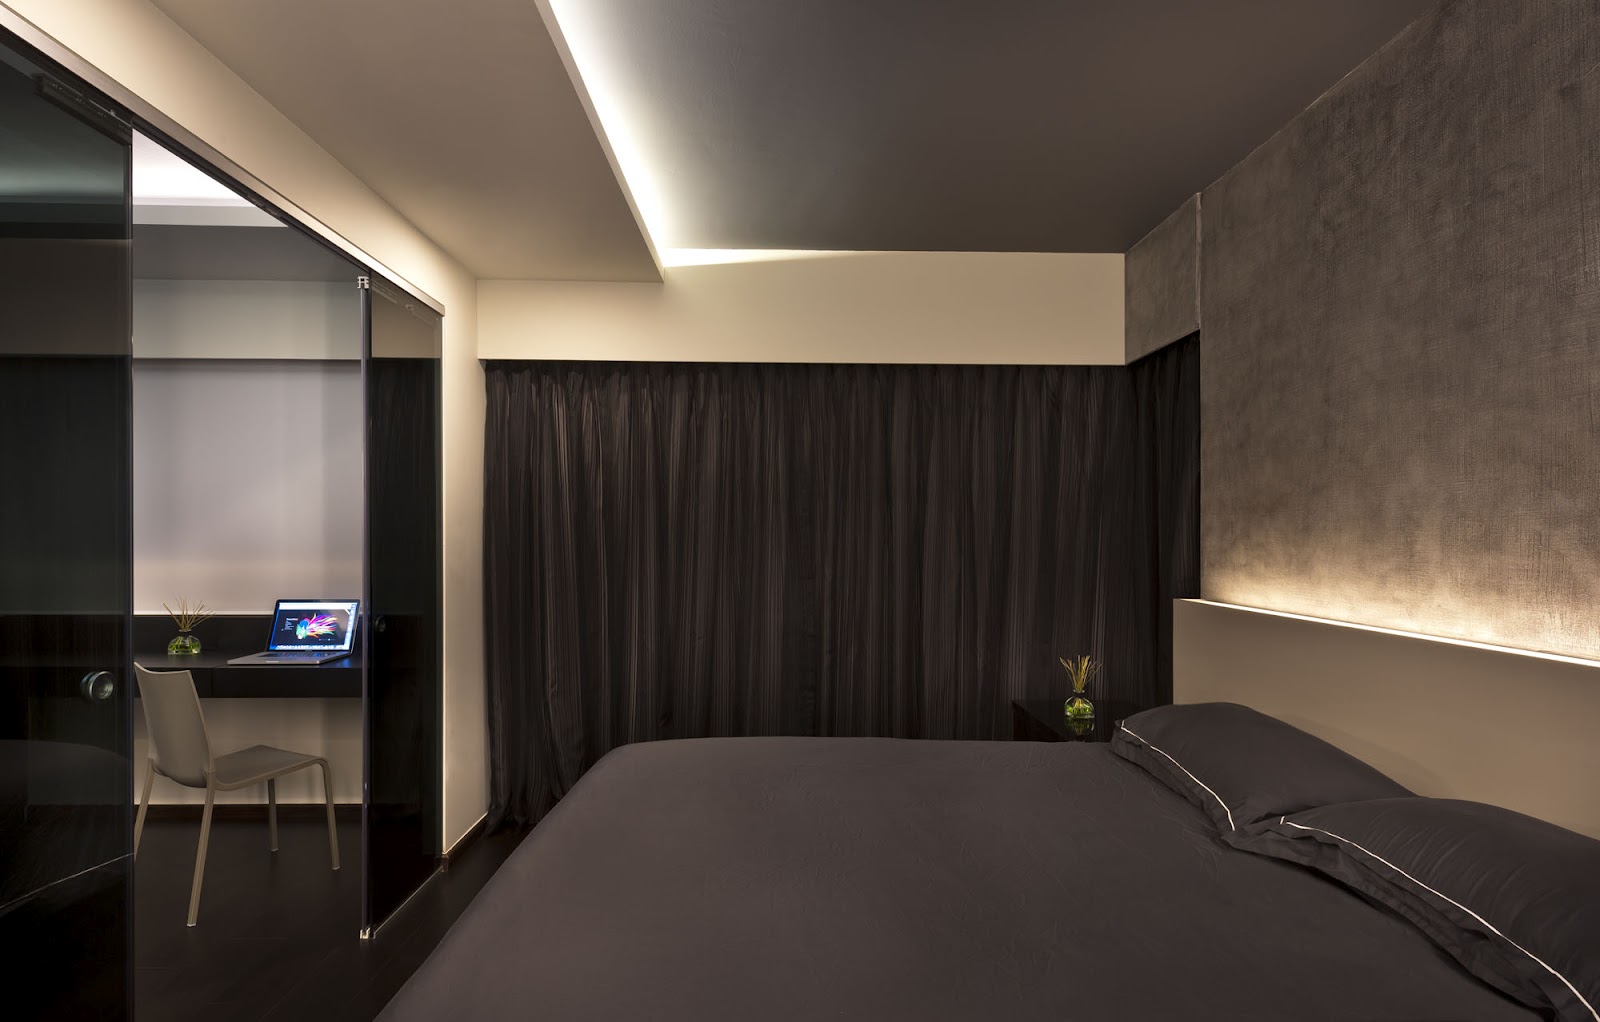 Singapore Hdb 3 Room Flat Interior Designs | Joy Studio Design Gallery 